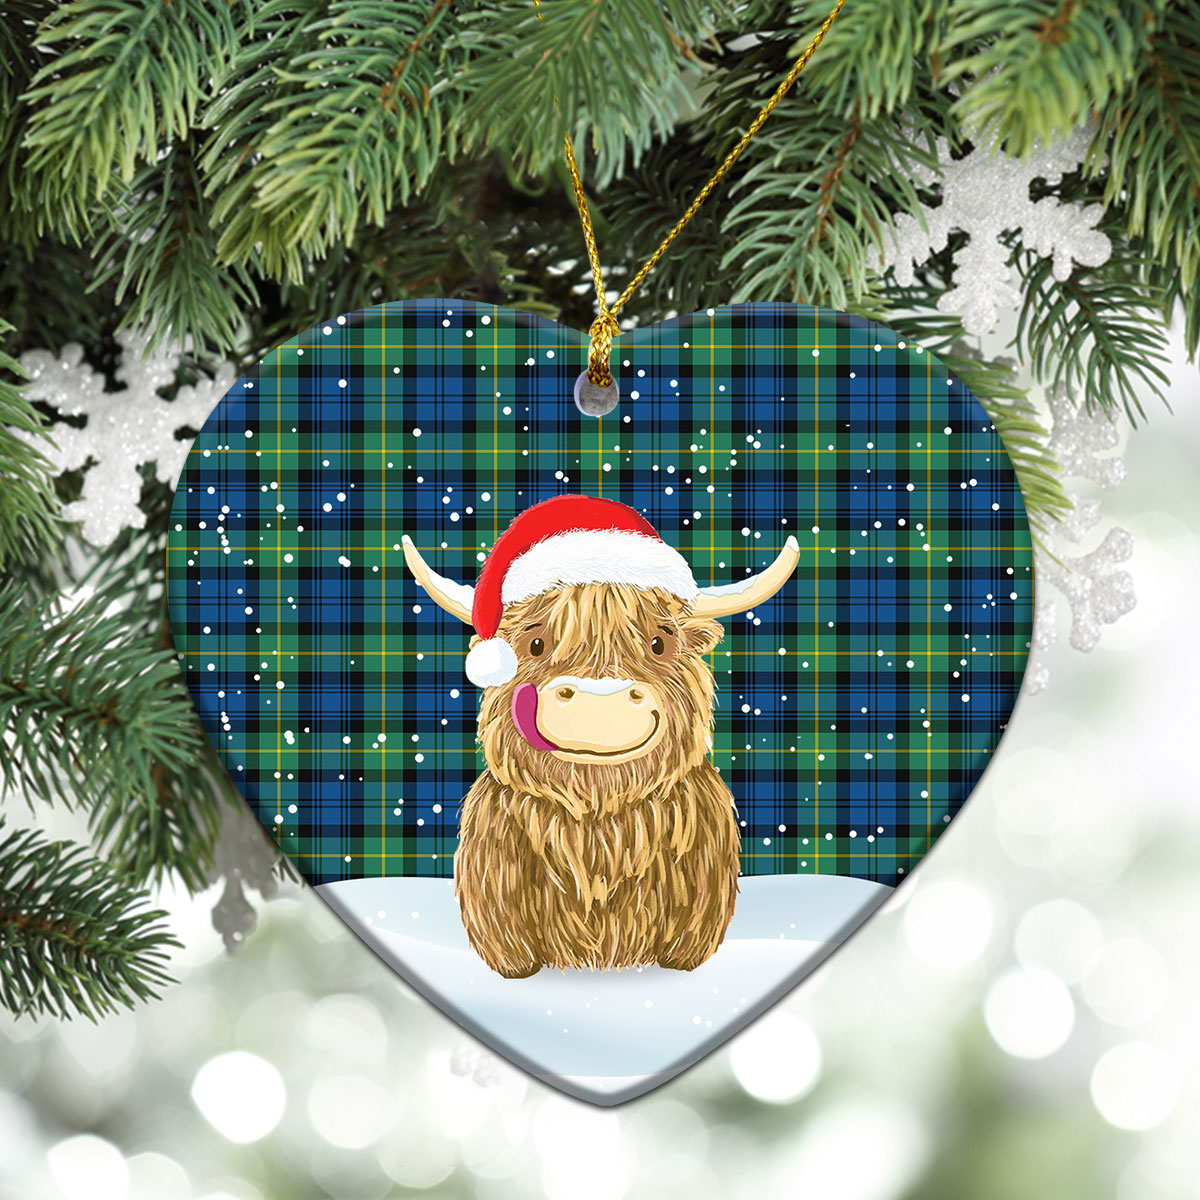 Gordon Ancient Tartan Christmas Ceramic Ornament - Highland Cows Style